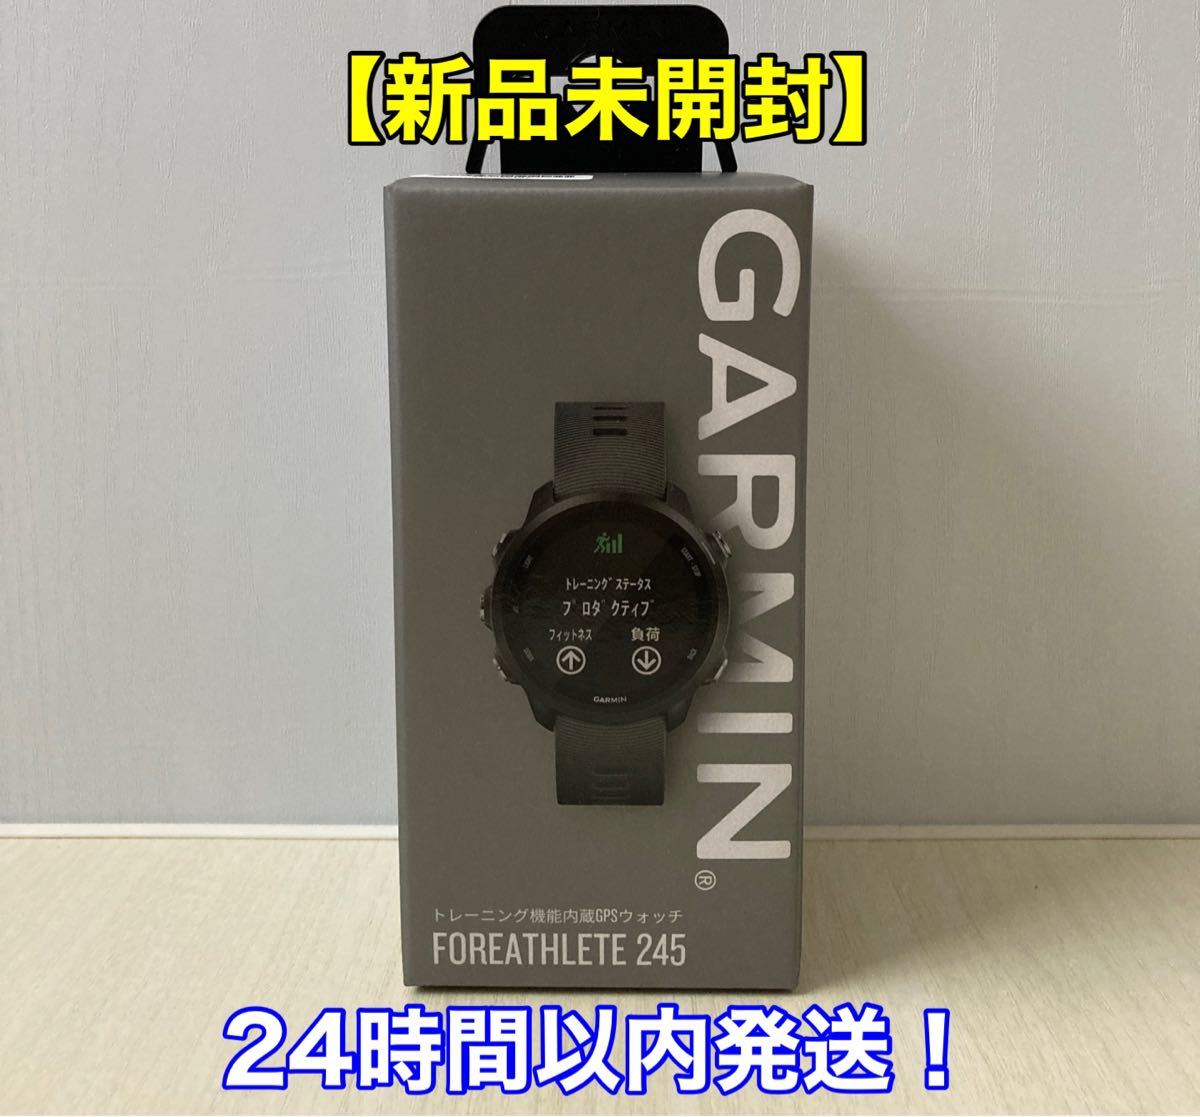 日本公式代理店 ガーミン。GARMIN FOREATHLETE 245 BLACK。新品未使用 PC周辺機器